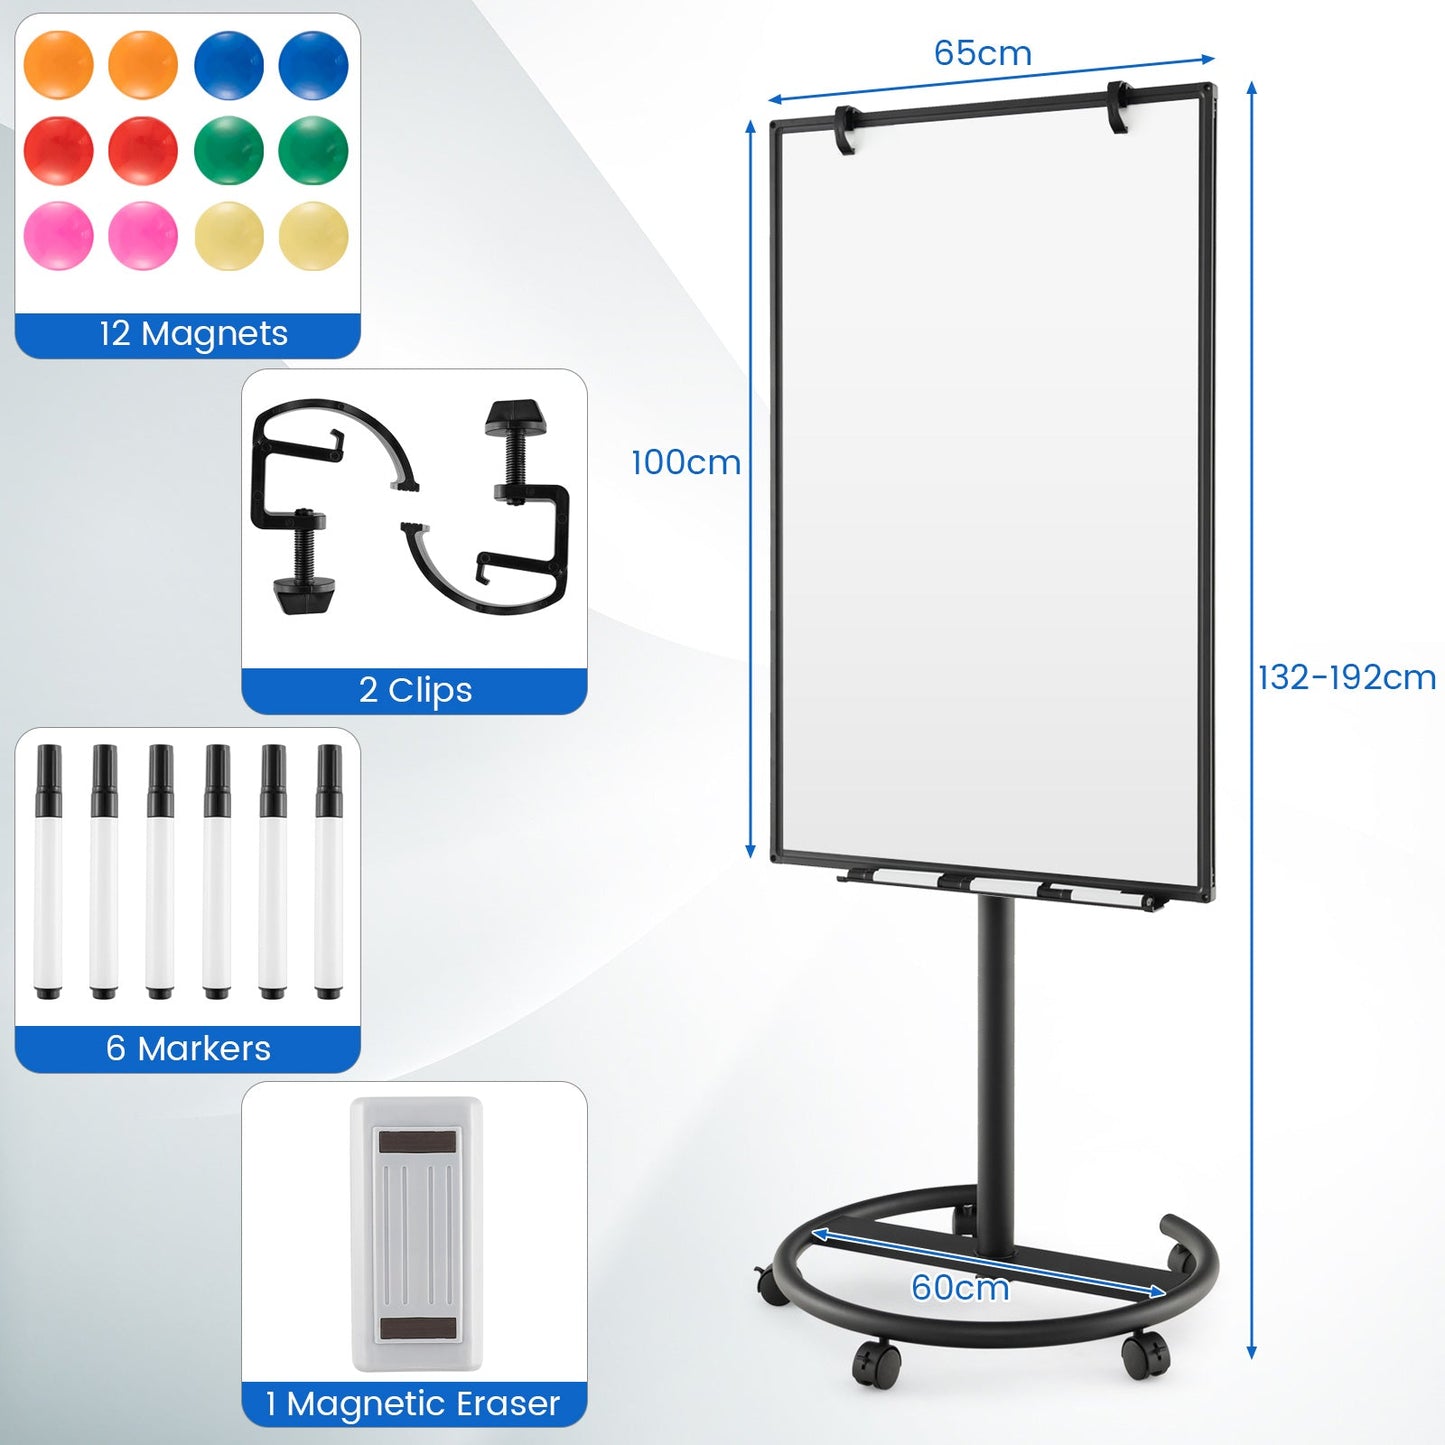 100 cm x 65 cm Height-Adjustable Magnetic Whiteboard on Wheels-Black; White